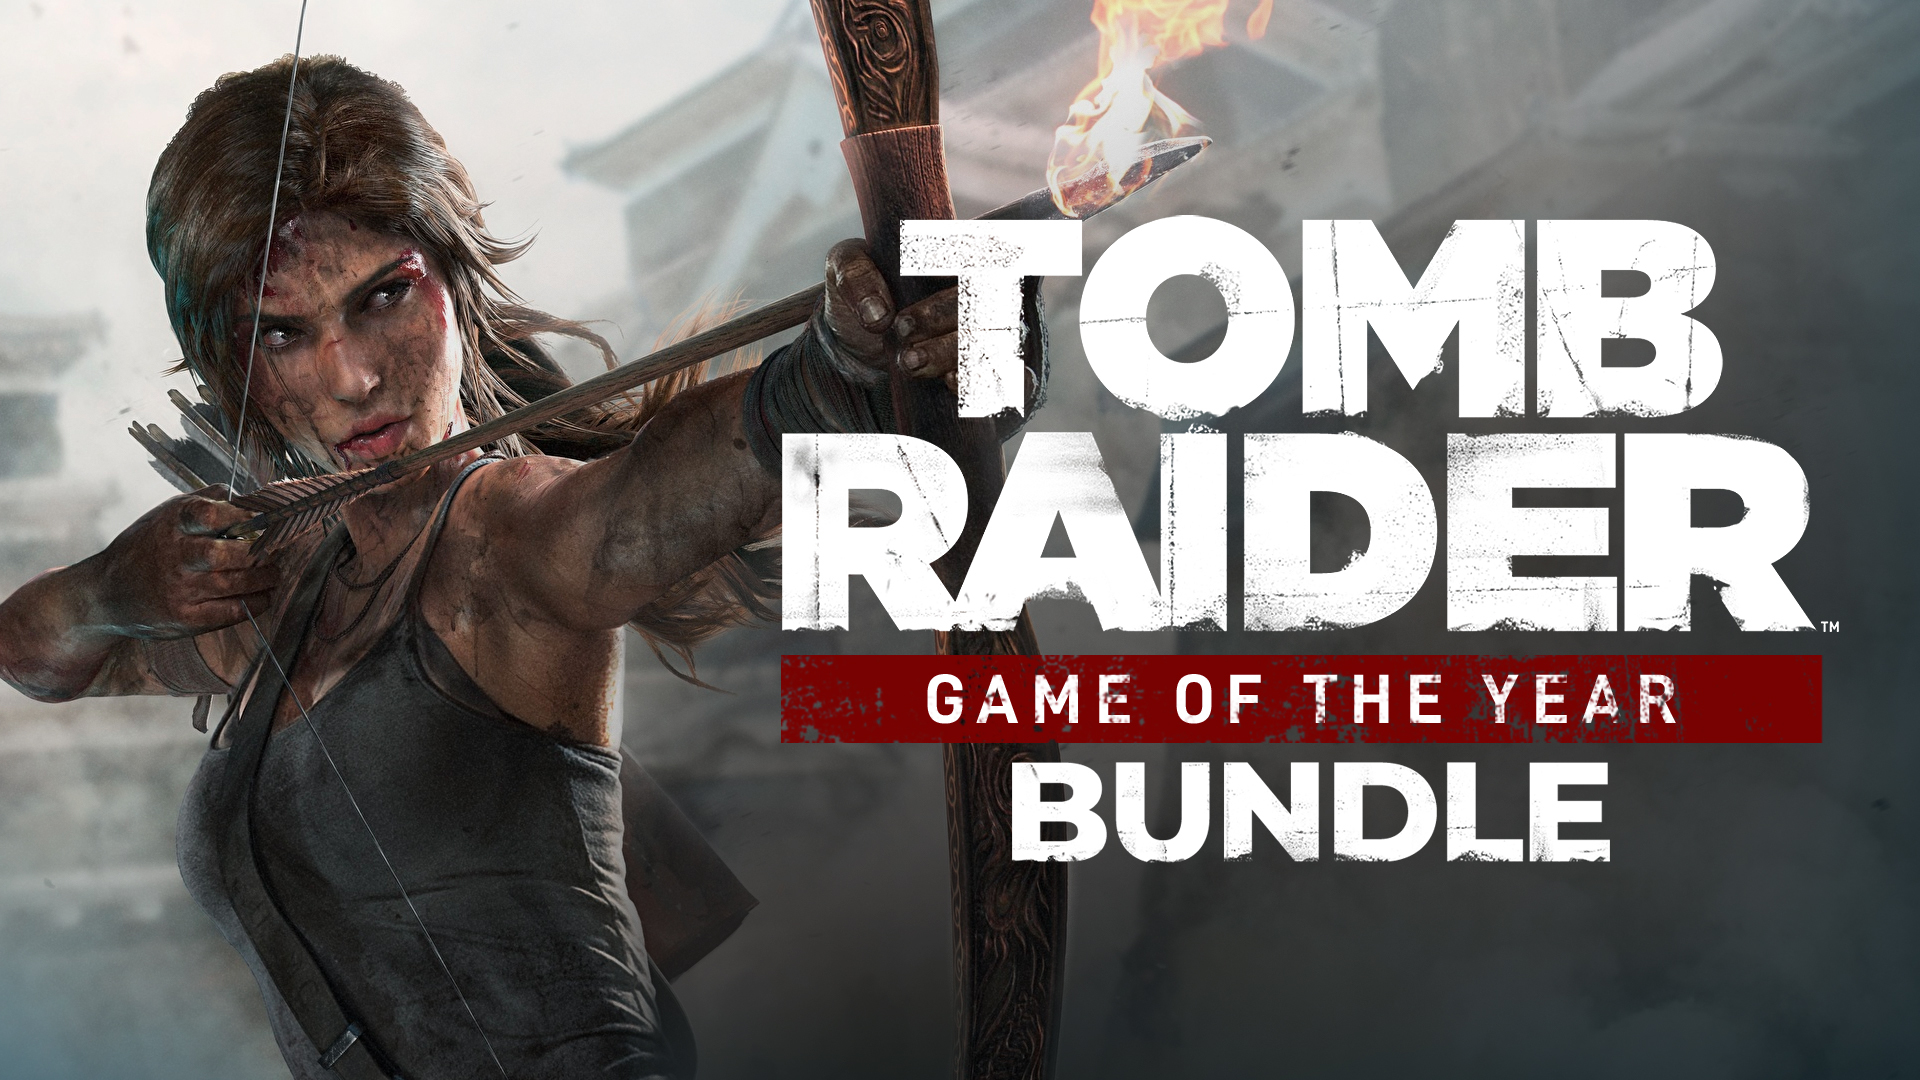 Tomb Raider GOTY Bundle. Steam Game Bundle